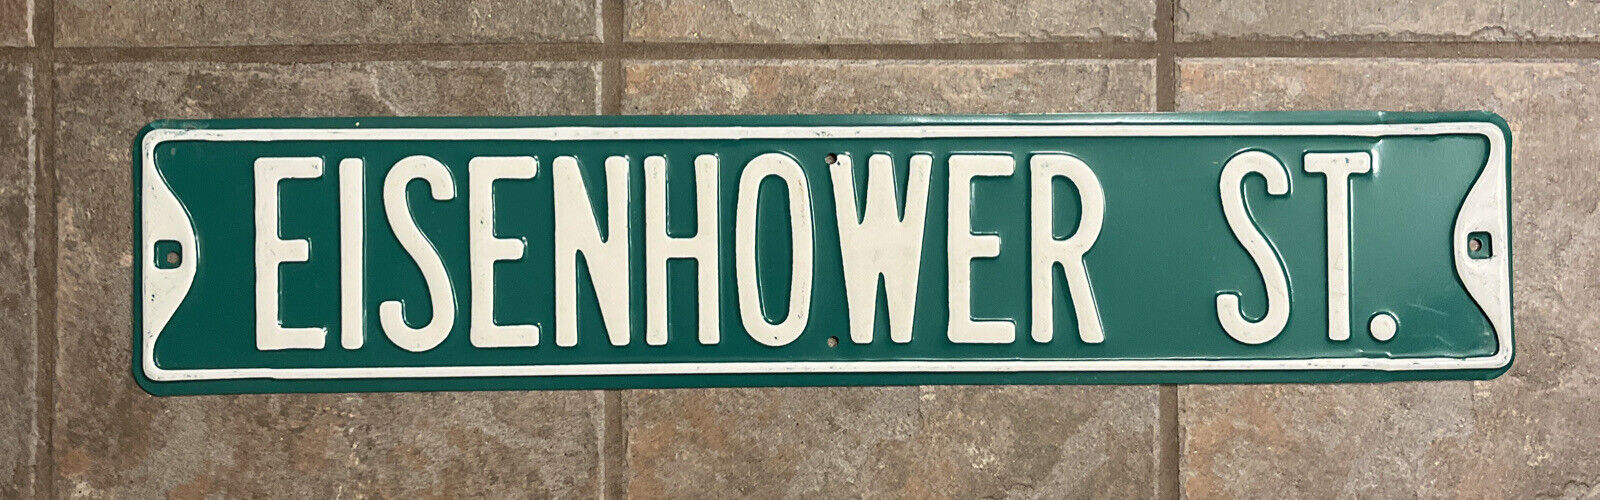 “Eisenhower Street” Metal Street Road Sign Embossed Green Raised White Letters